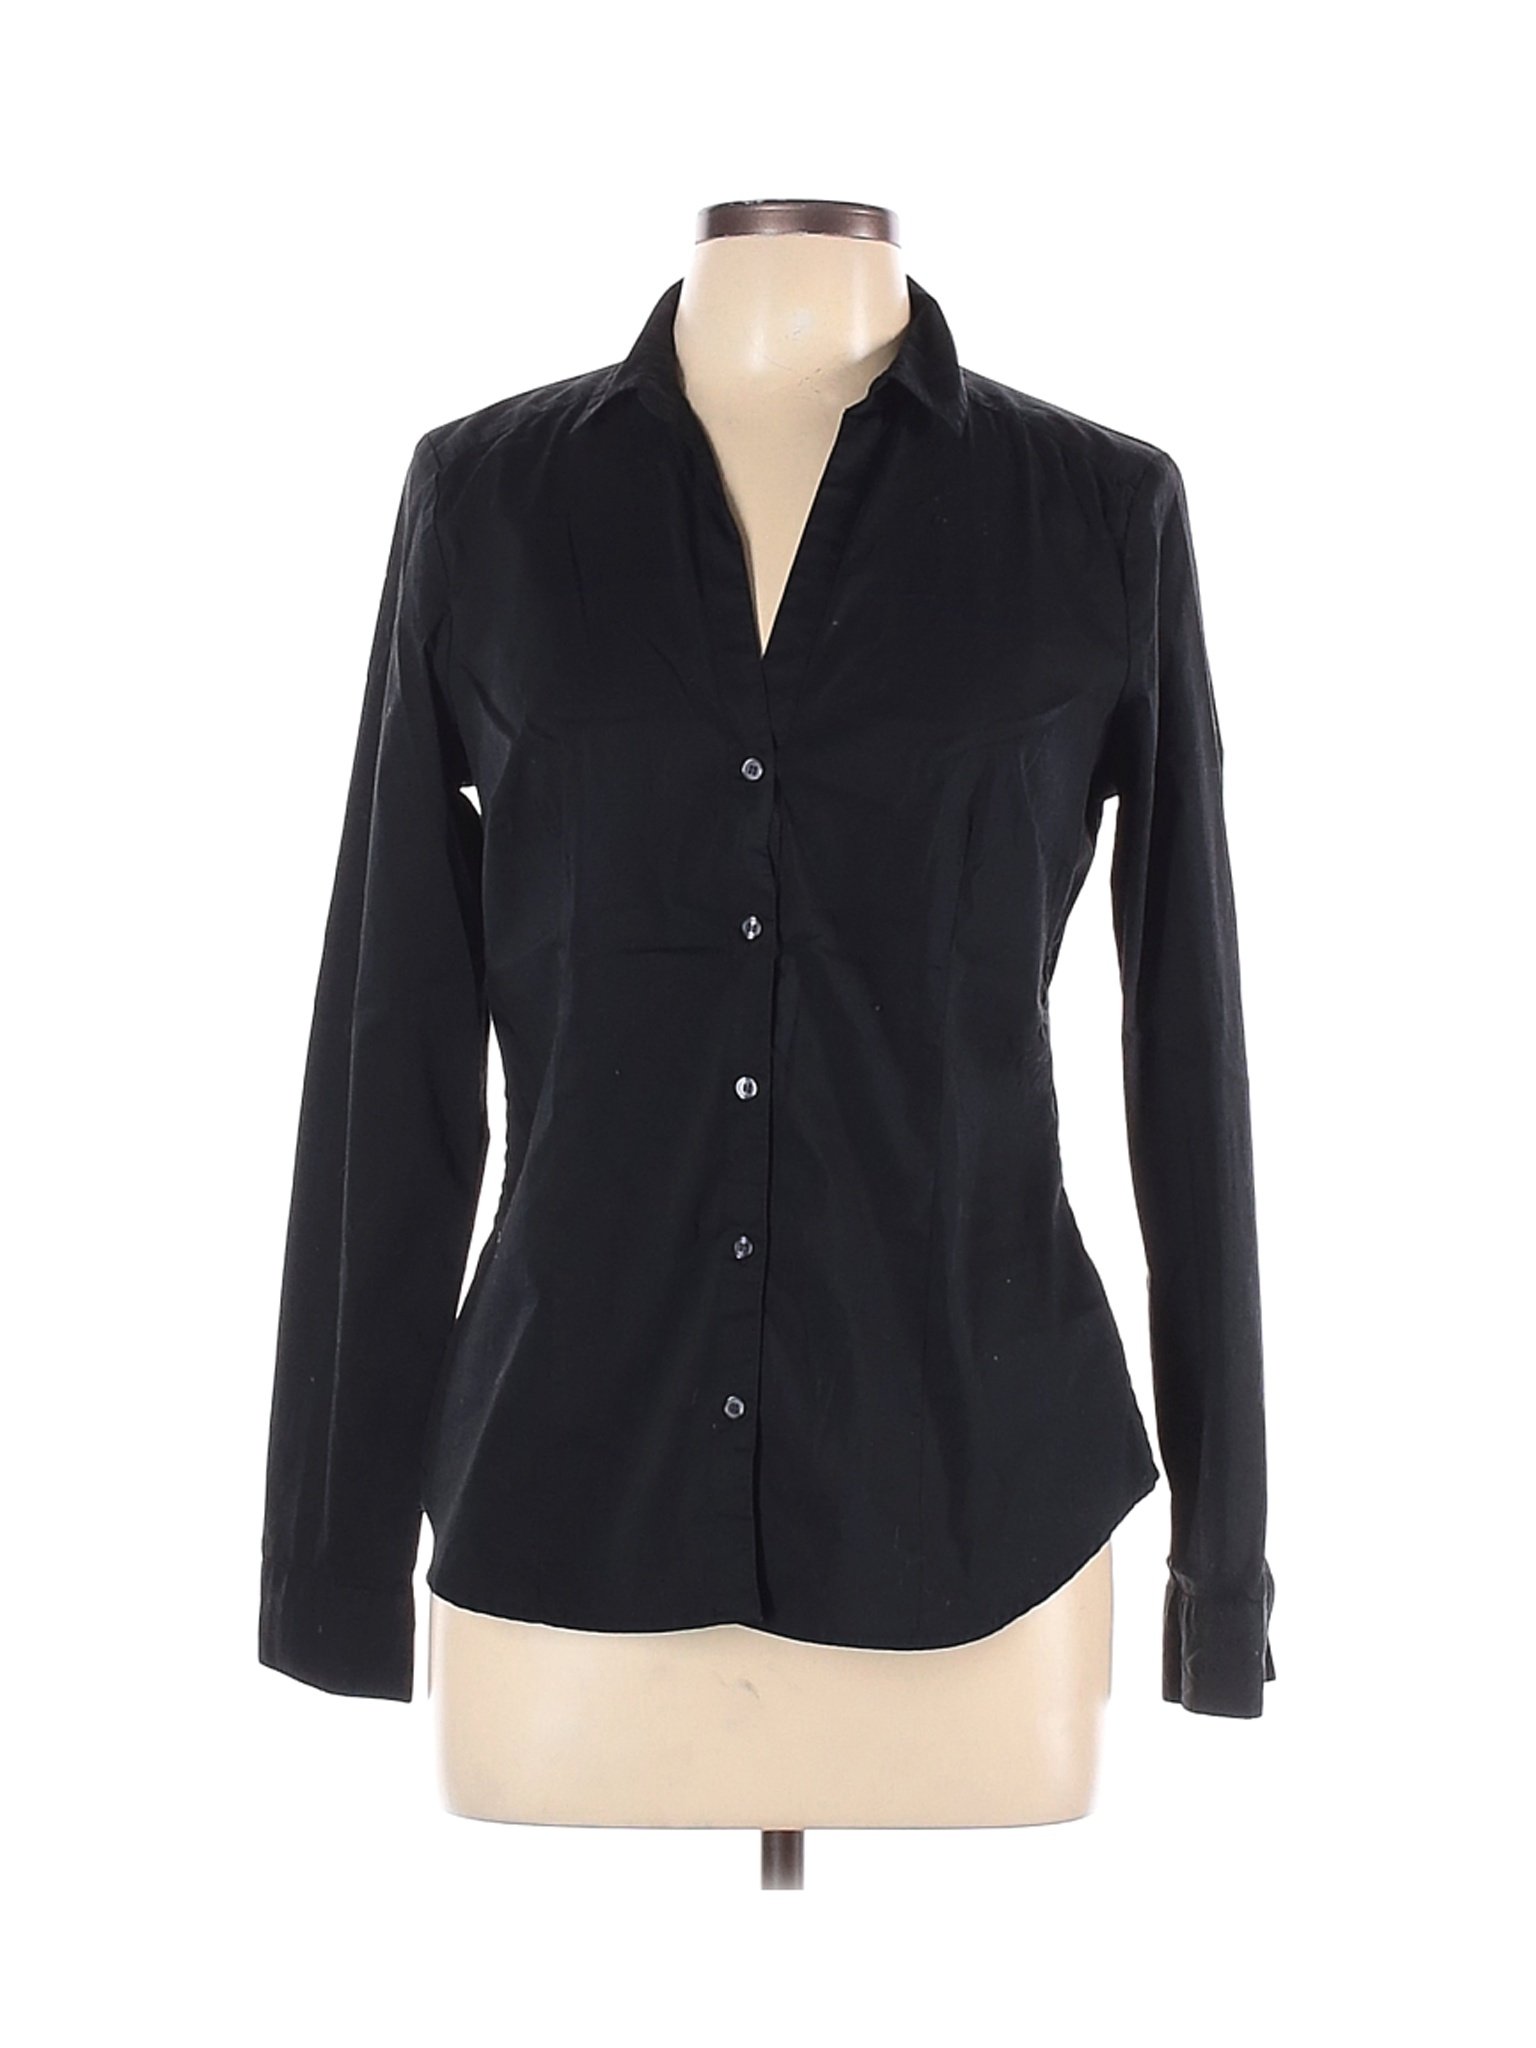 H&M Women Black Long Sleeve Button-Down Shirt 12 | eBay